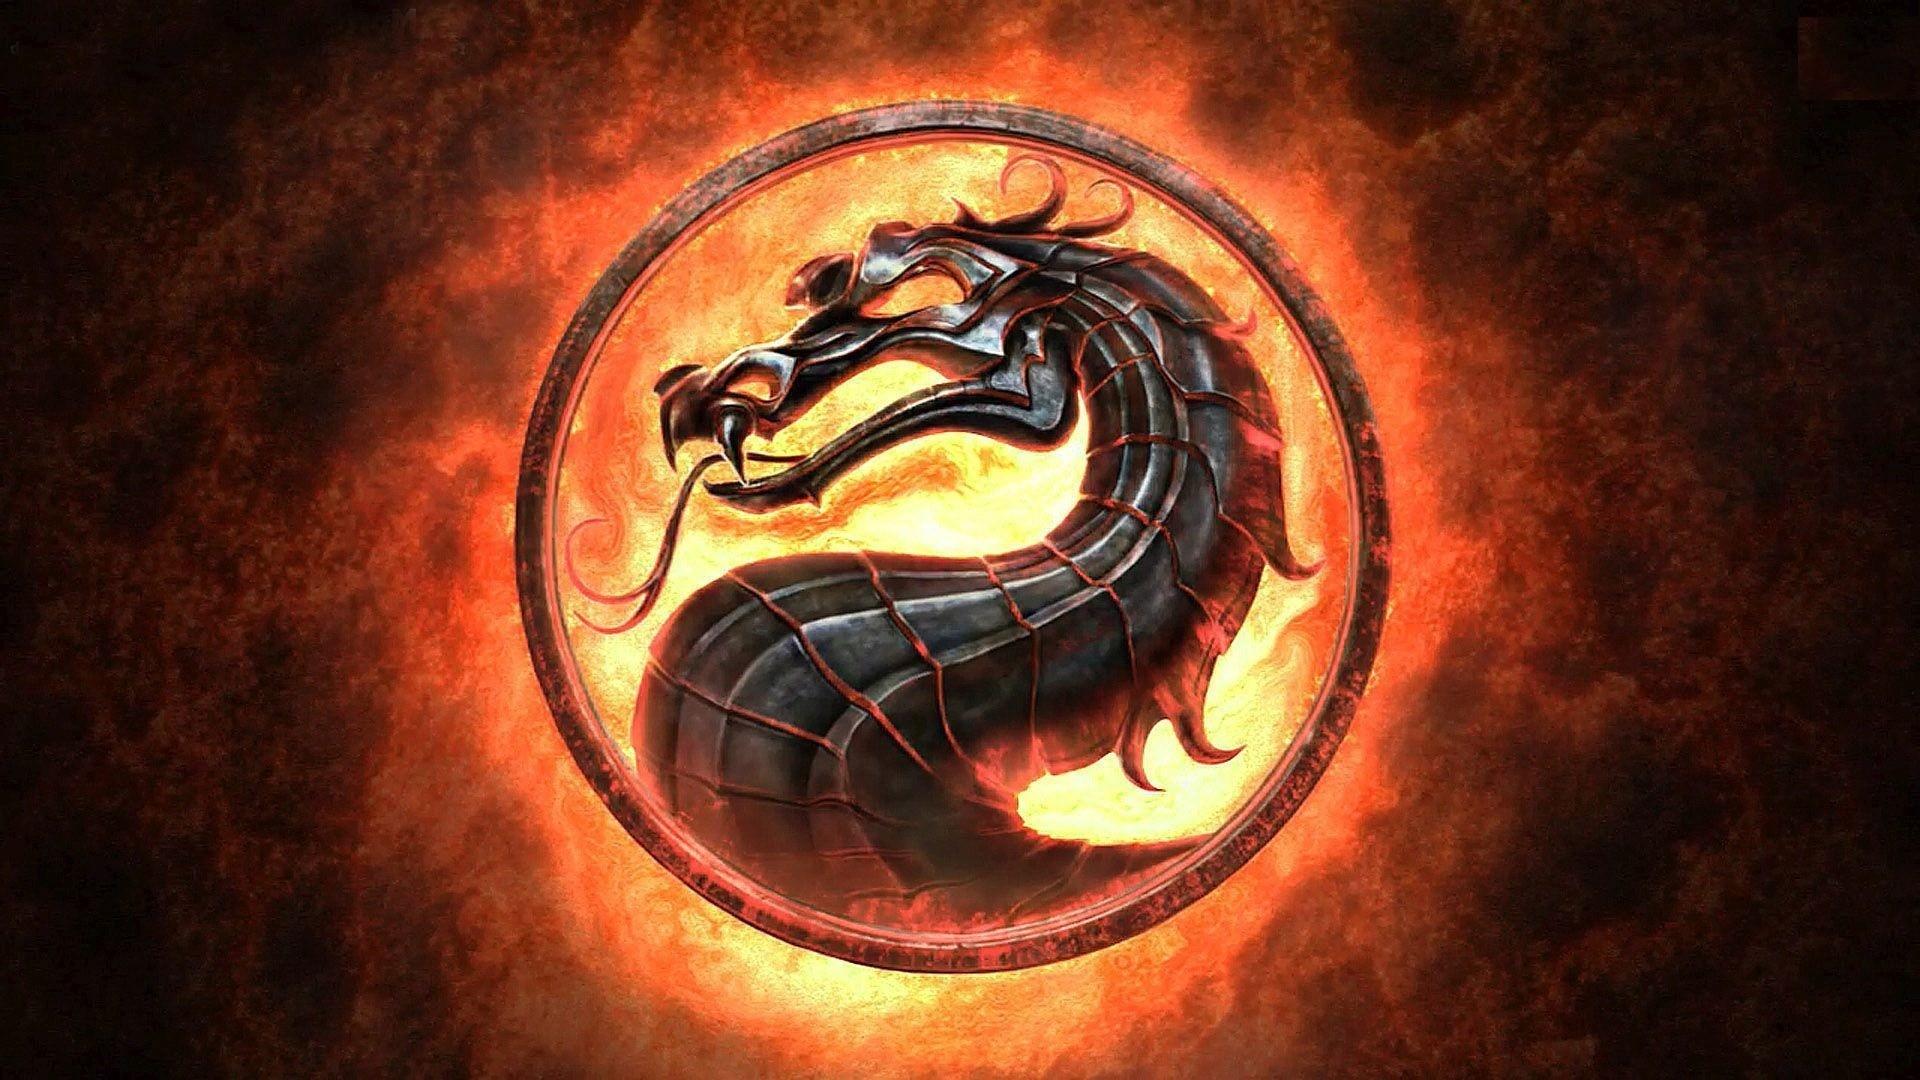 Mortal Kombat Dragon Logo Game Wallpaper Desktop Wallpaper HD High Definition Windows 10 Mac Apple Colourful Image Background Free 1920x